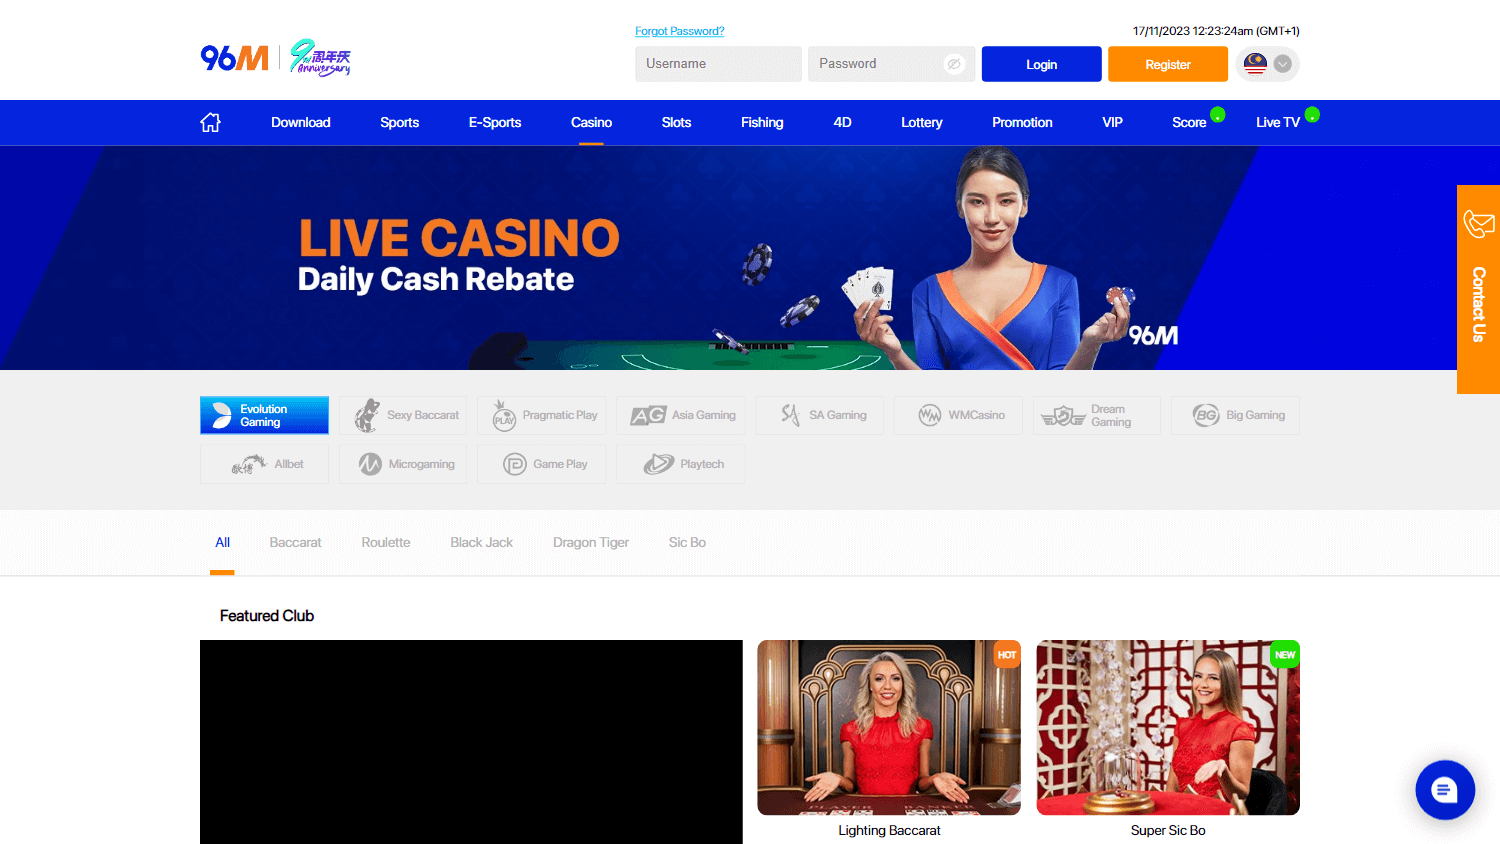 96m_casino_game_gallery_desktop